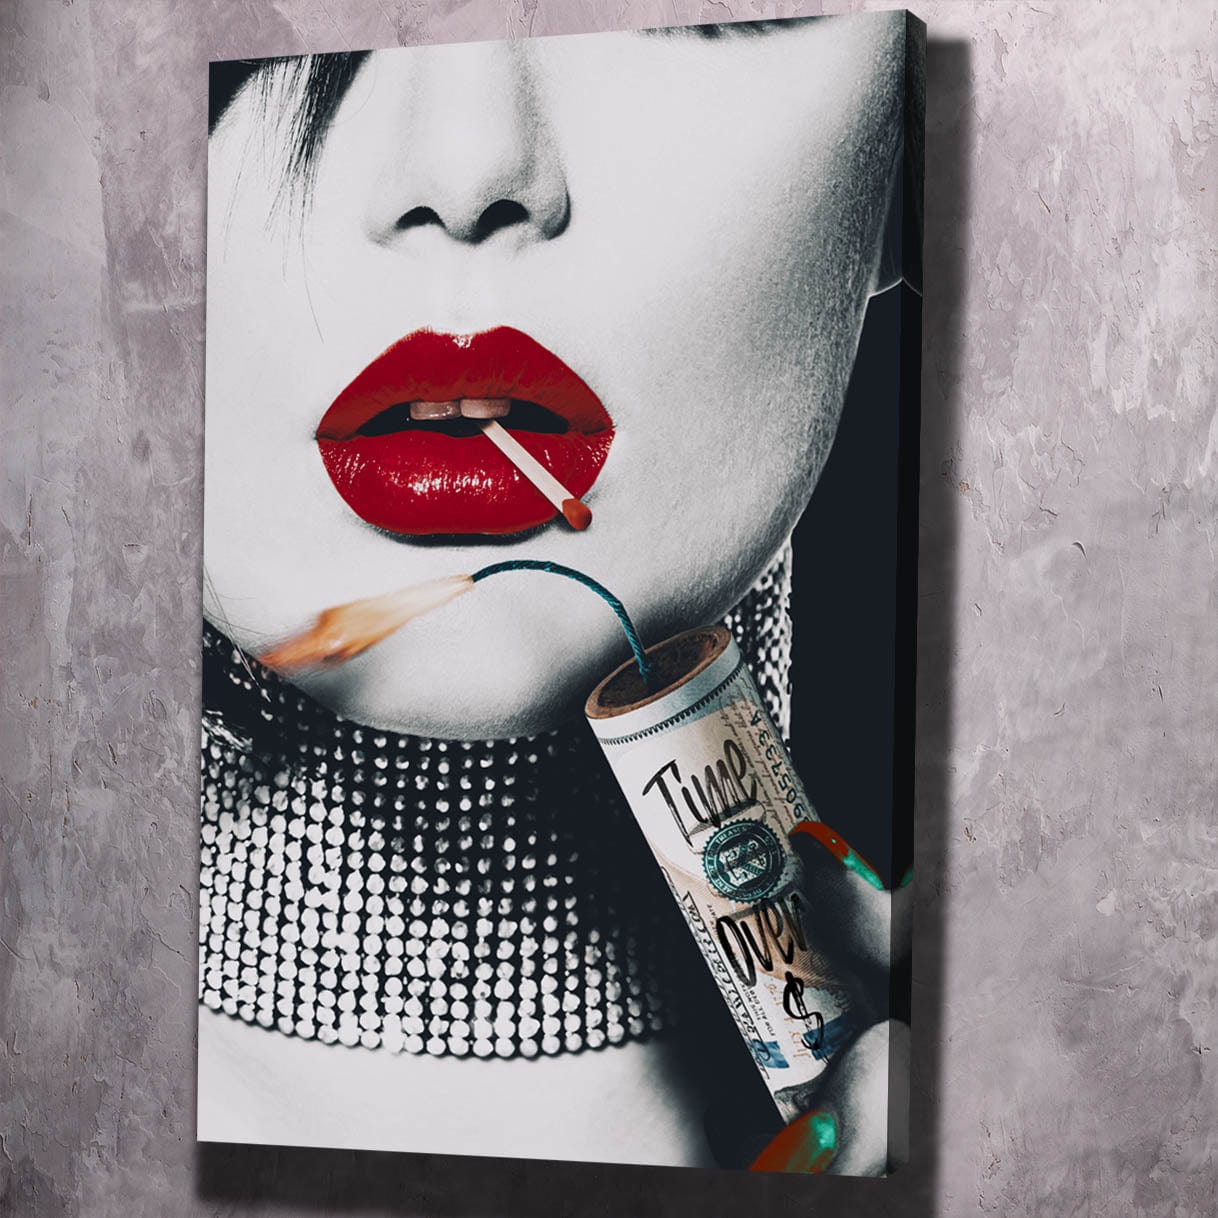 Time Over Money Dynamite Beauty Art Wall Art | Inspirational Wall Art Motivational Wall Art Quotes Office Art | ImpaktMaker Exclusive Canvas Art Portrait